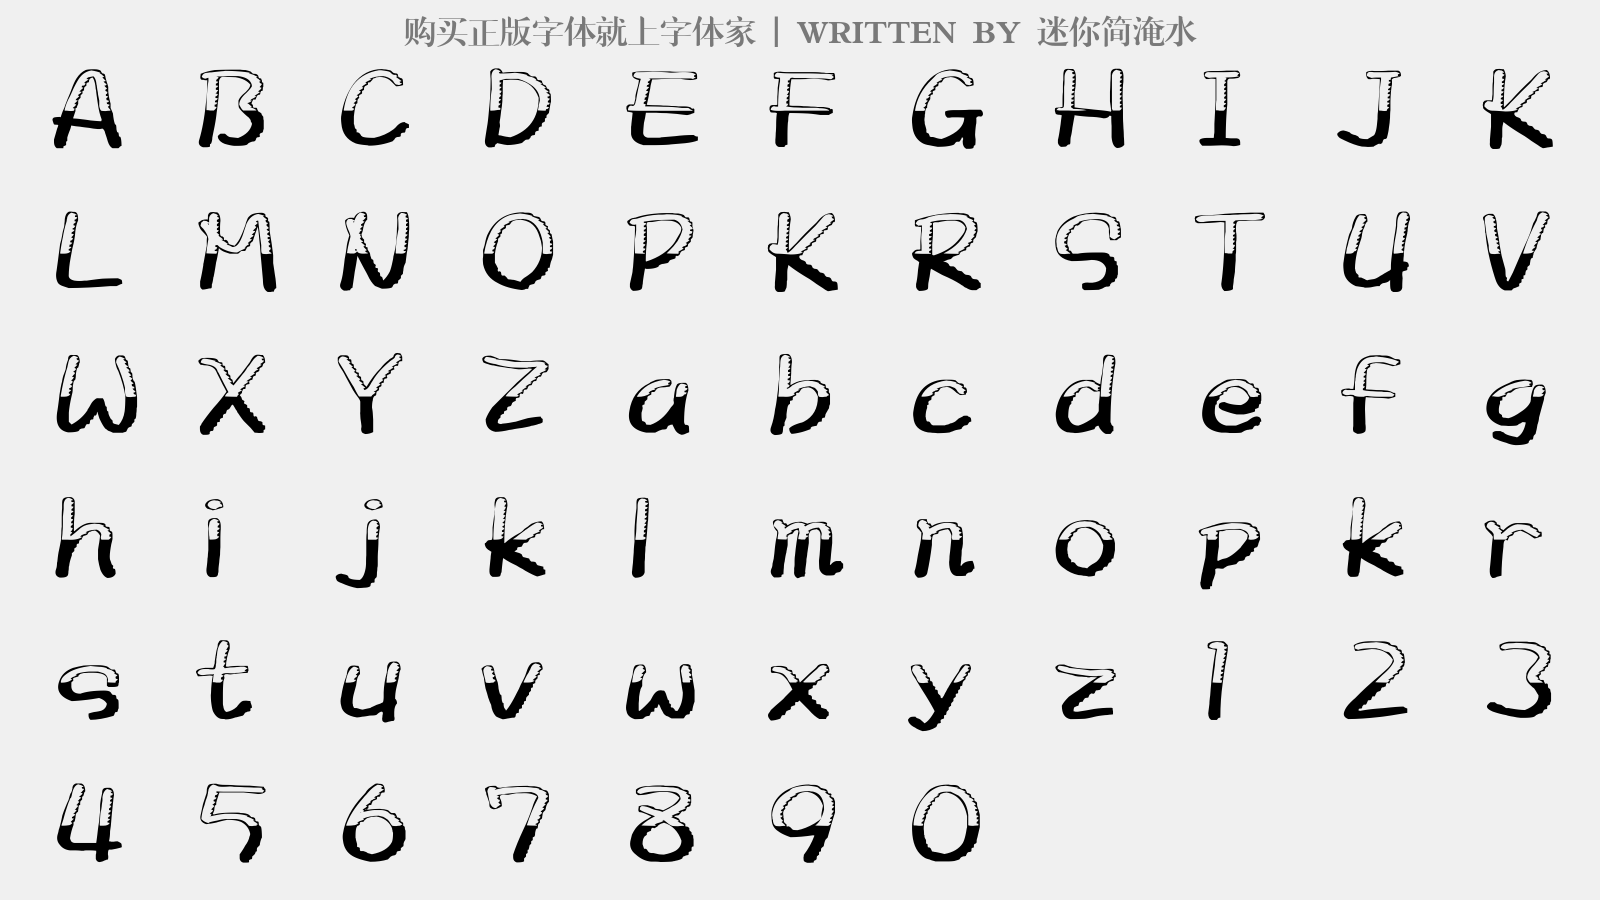 minijianyanshui - 大写字母/小写字母/数字